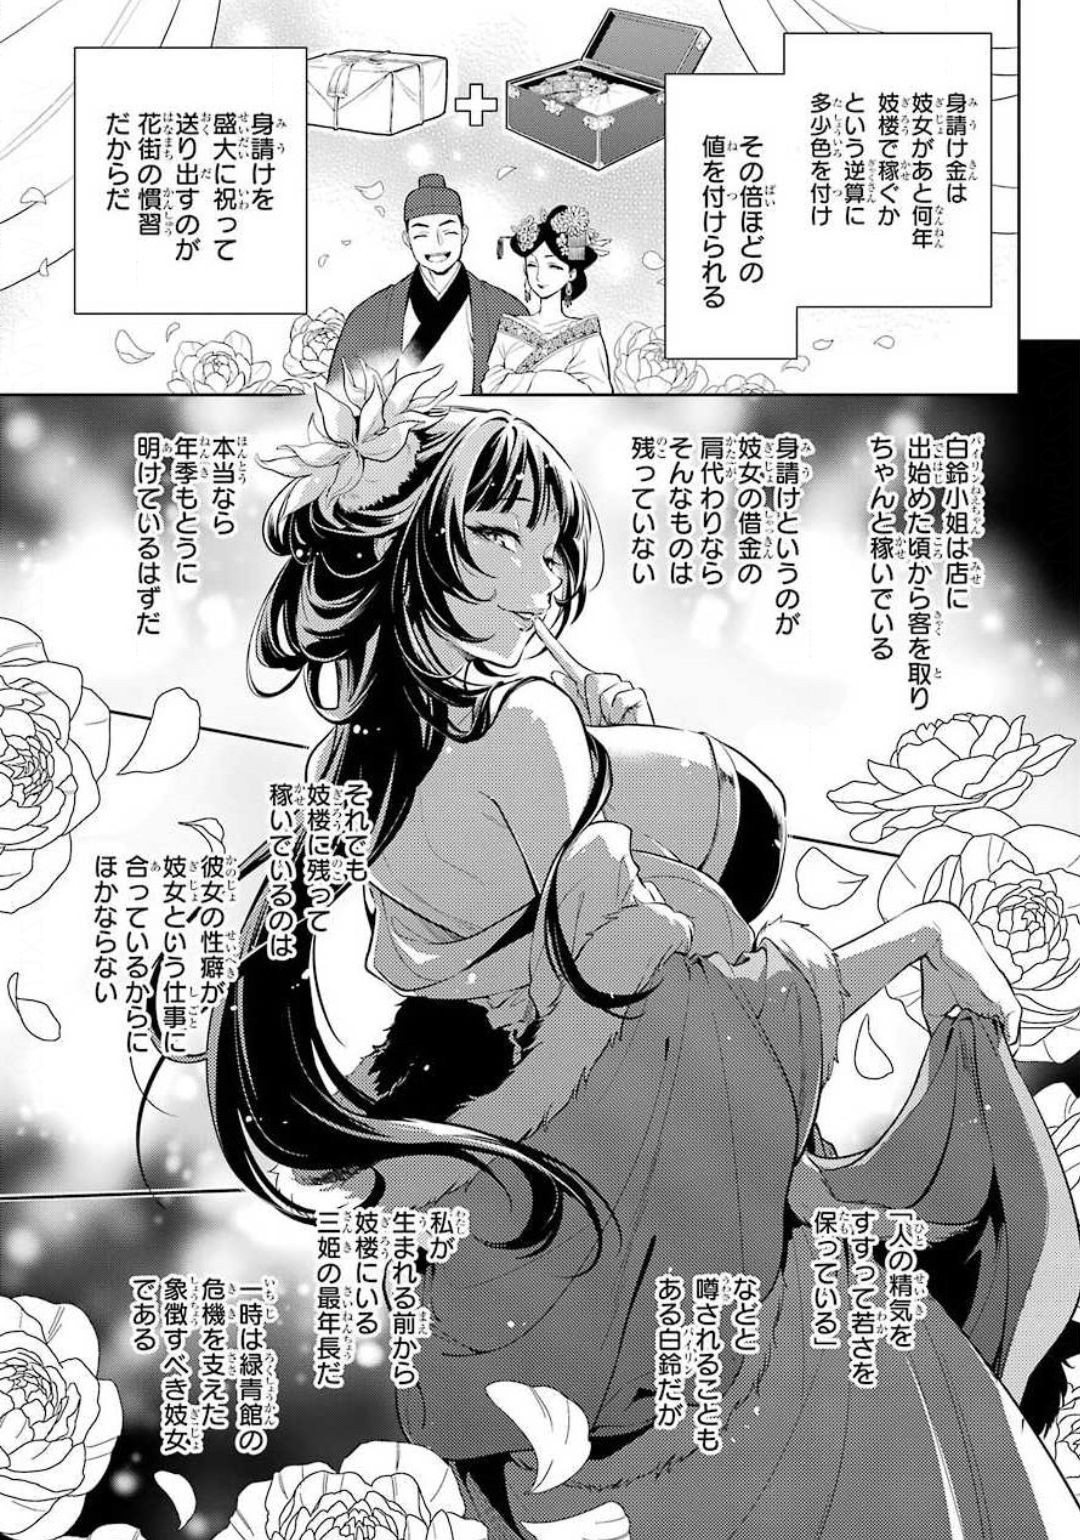 Kusuriya no Hitorigoto - Chapter 35-2 - Page 3